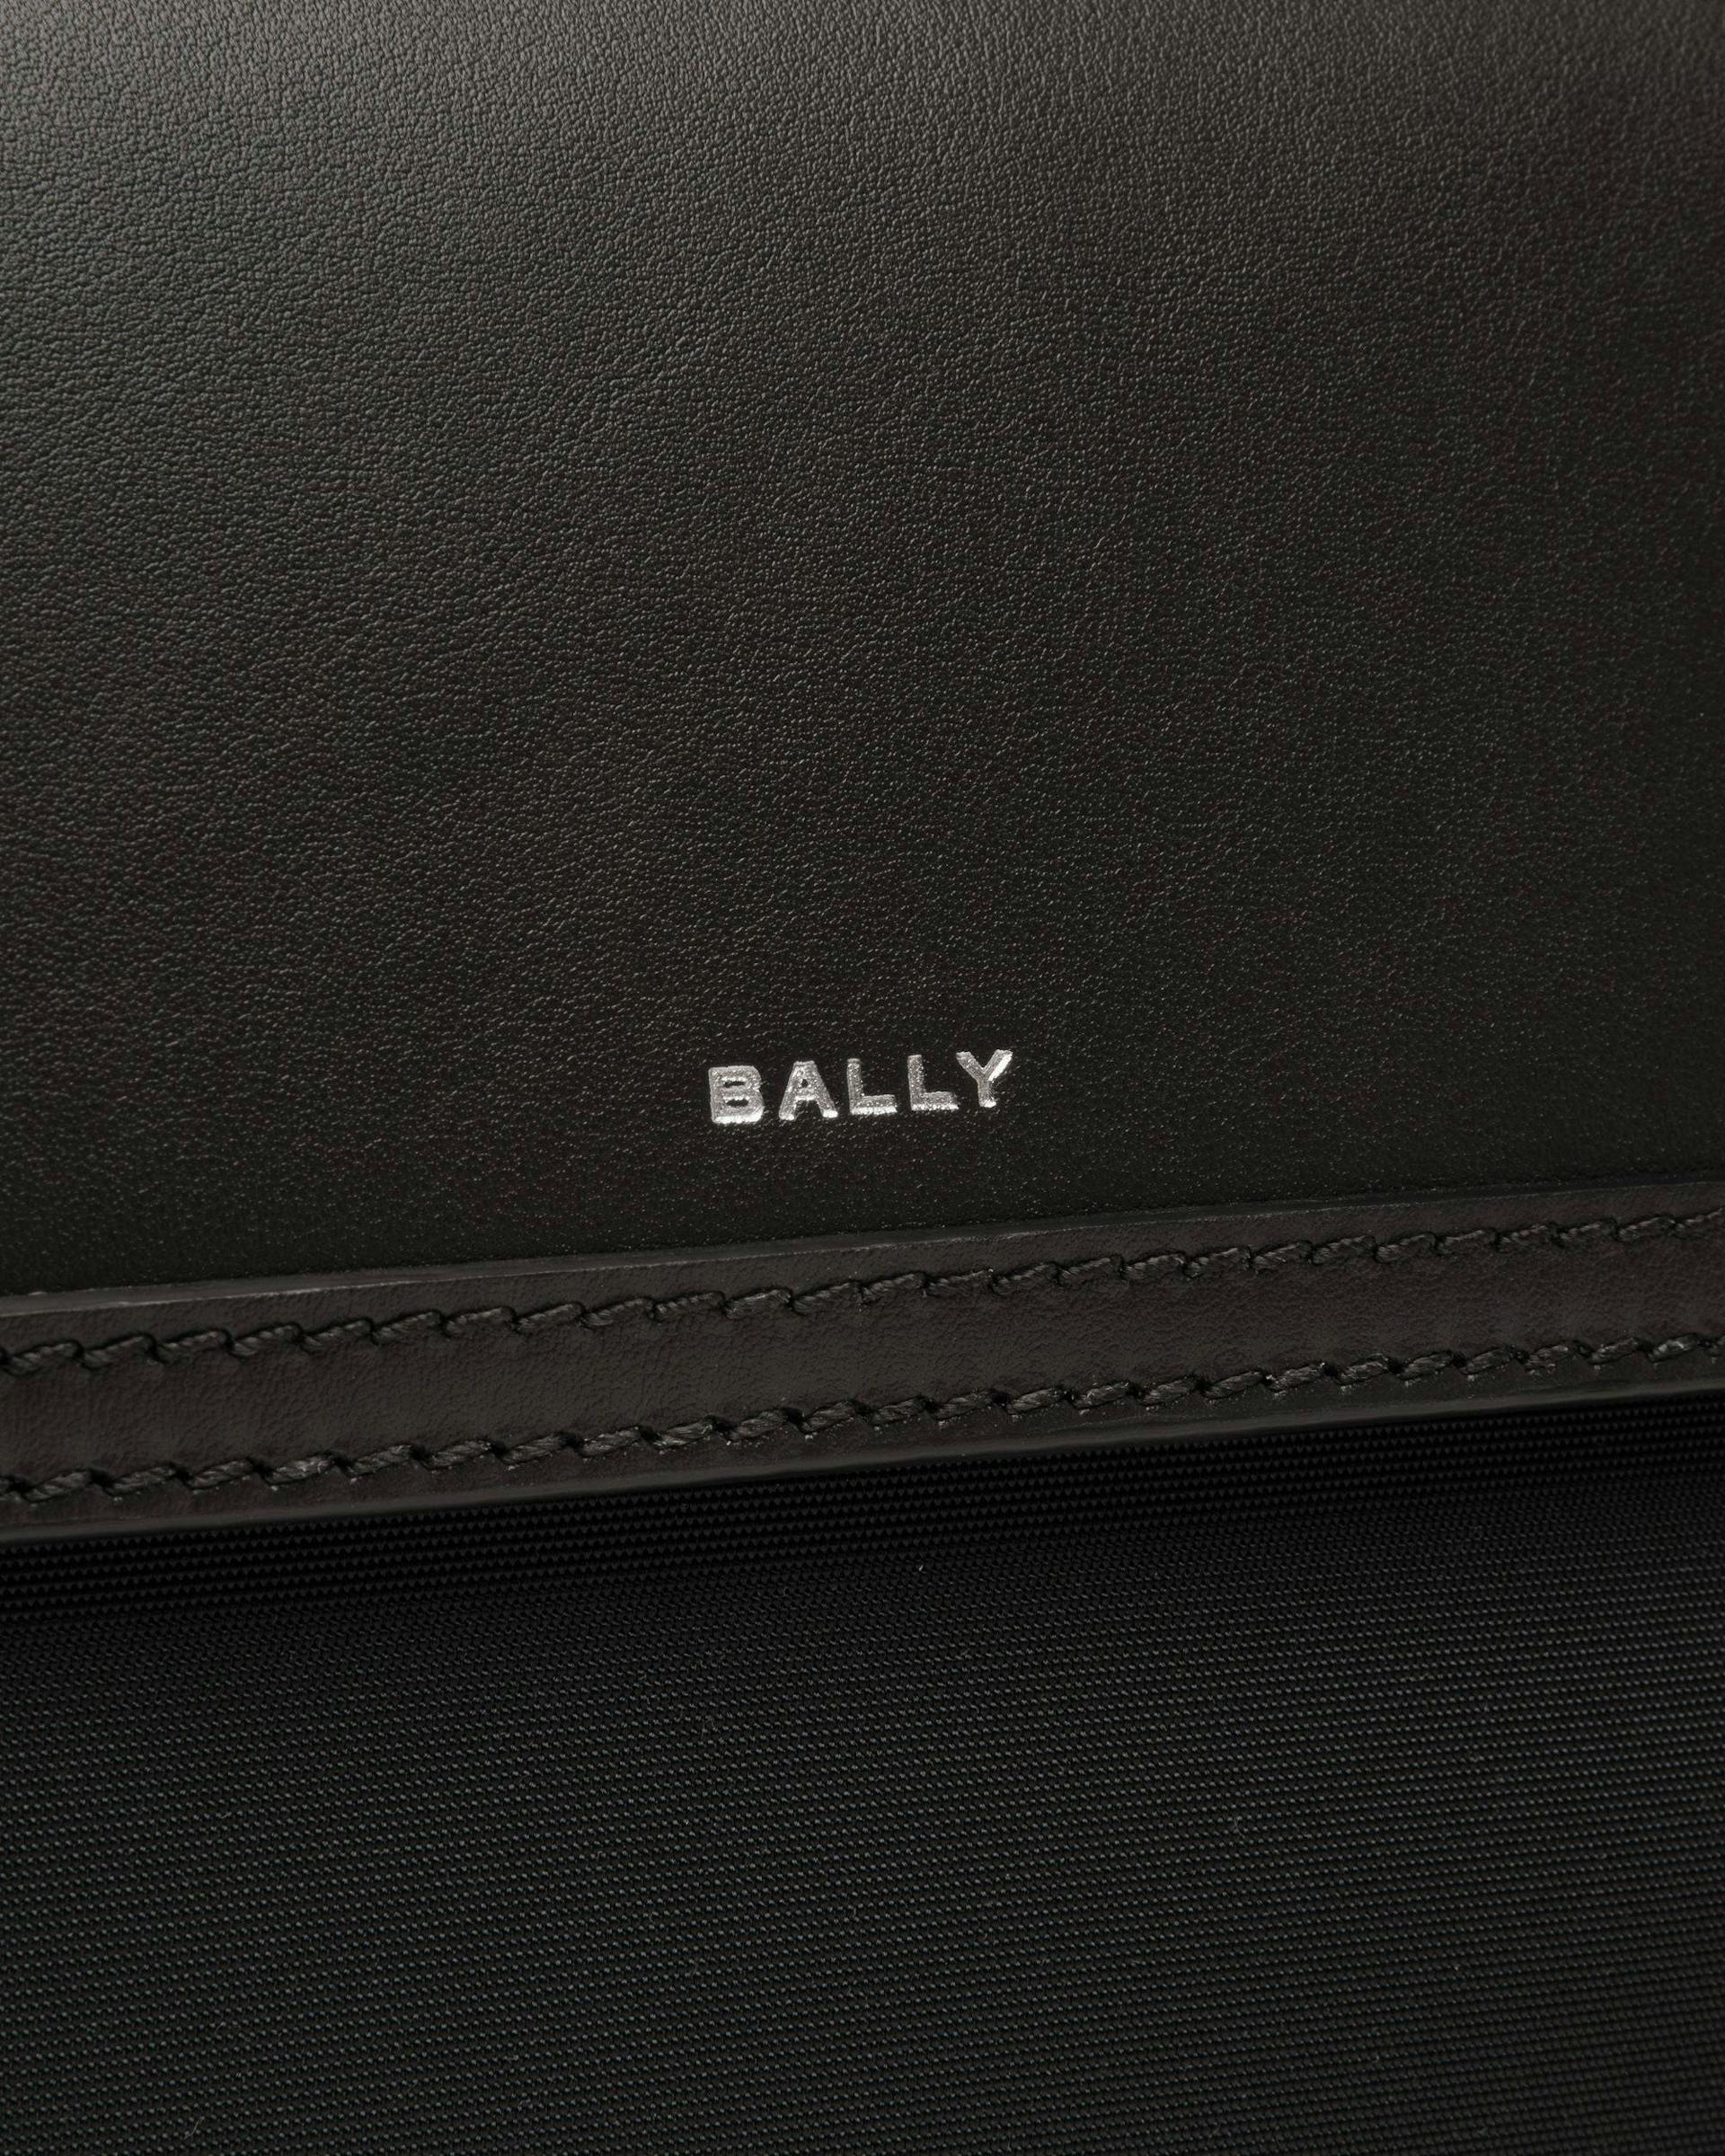 Men's Spin Crossbody Bag in Black Leather | Bally | Still Life Detail